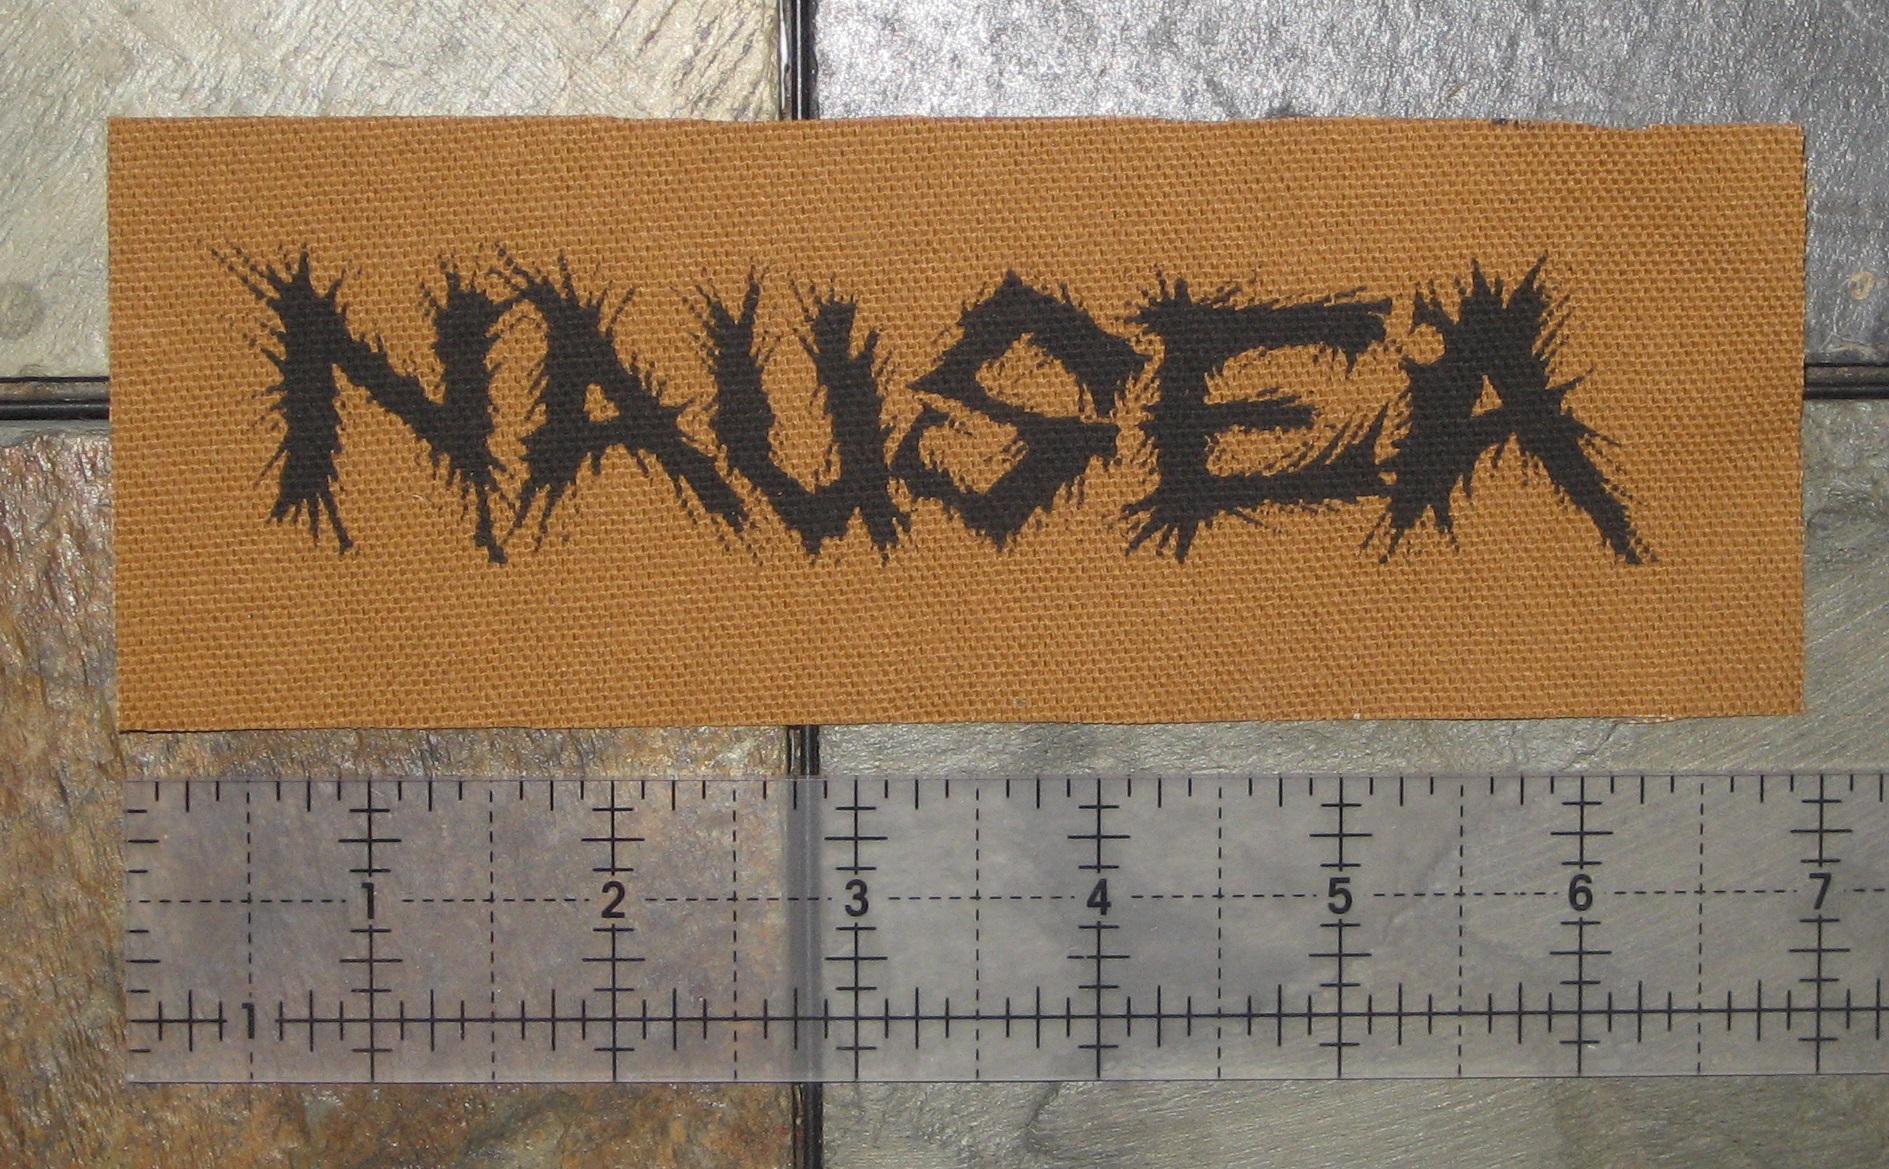 Nausea - Fabric Punk Patch — FoxAlive